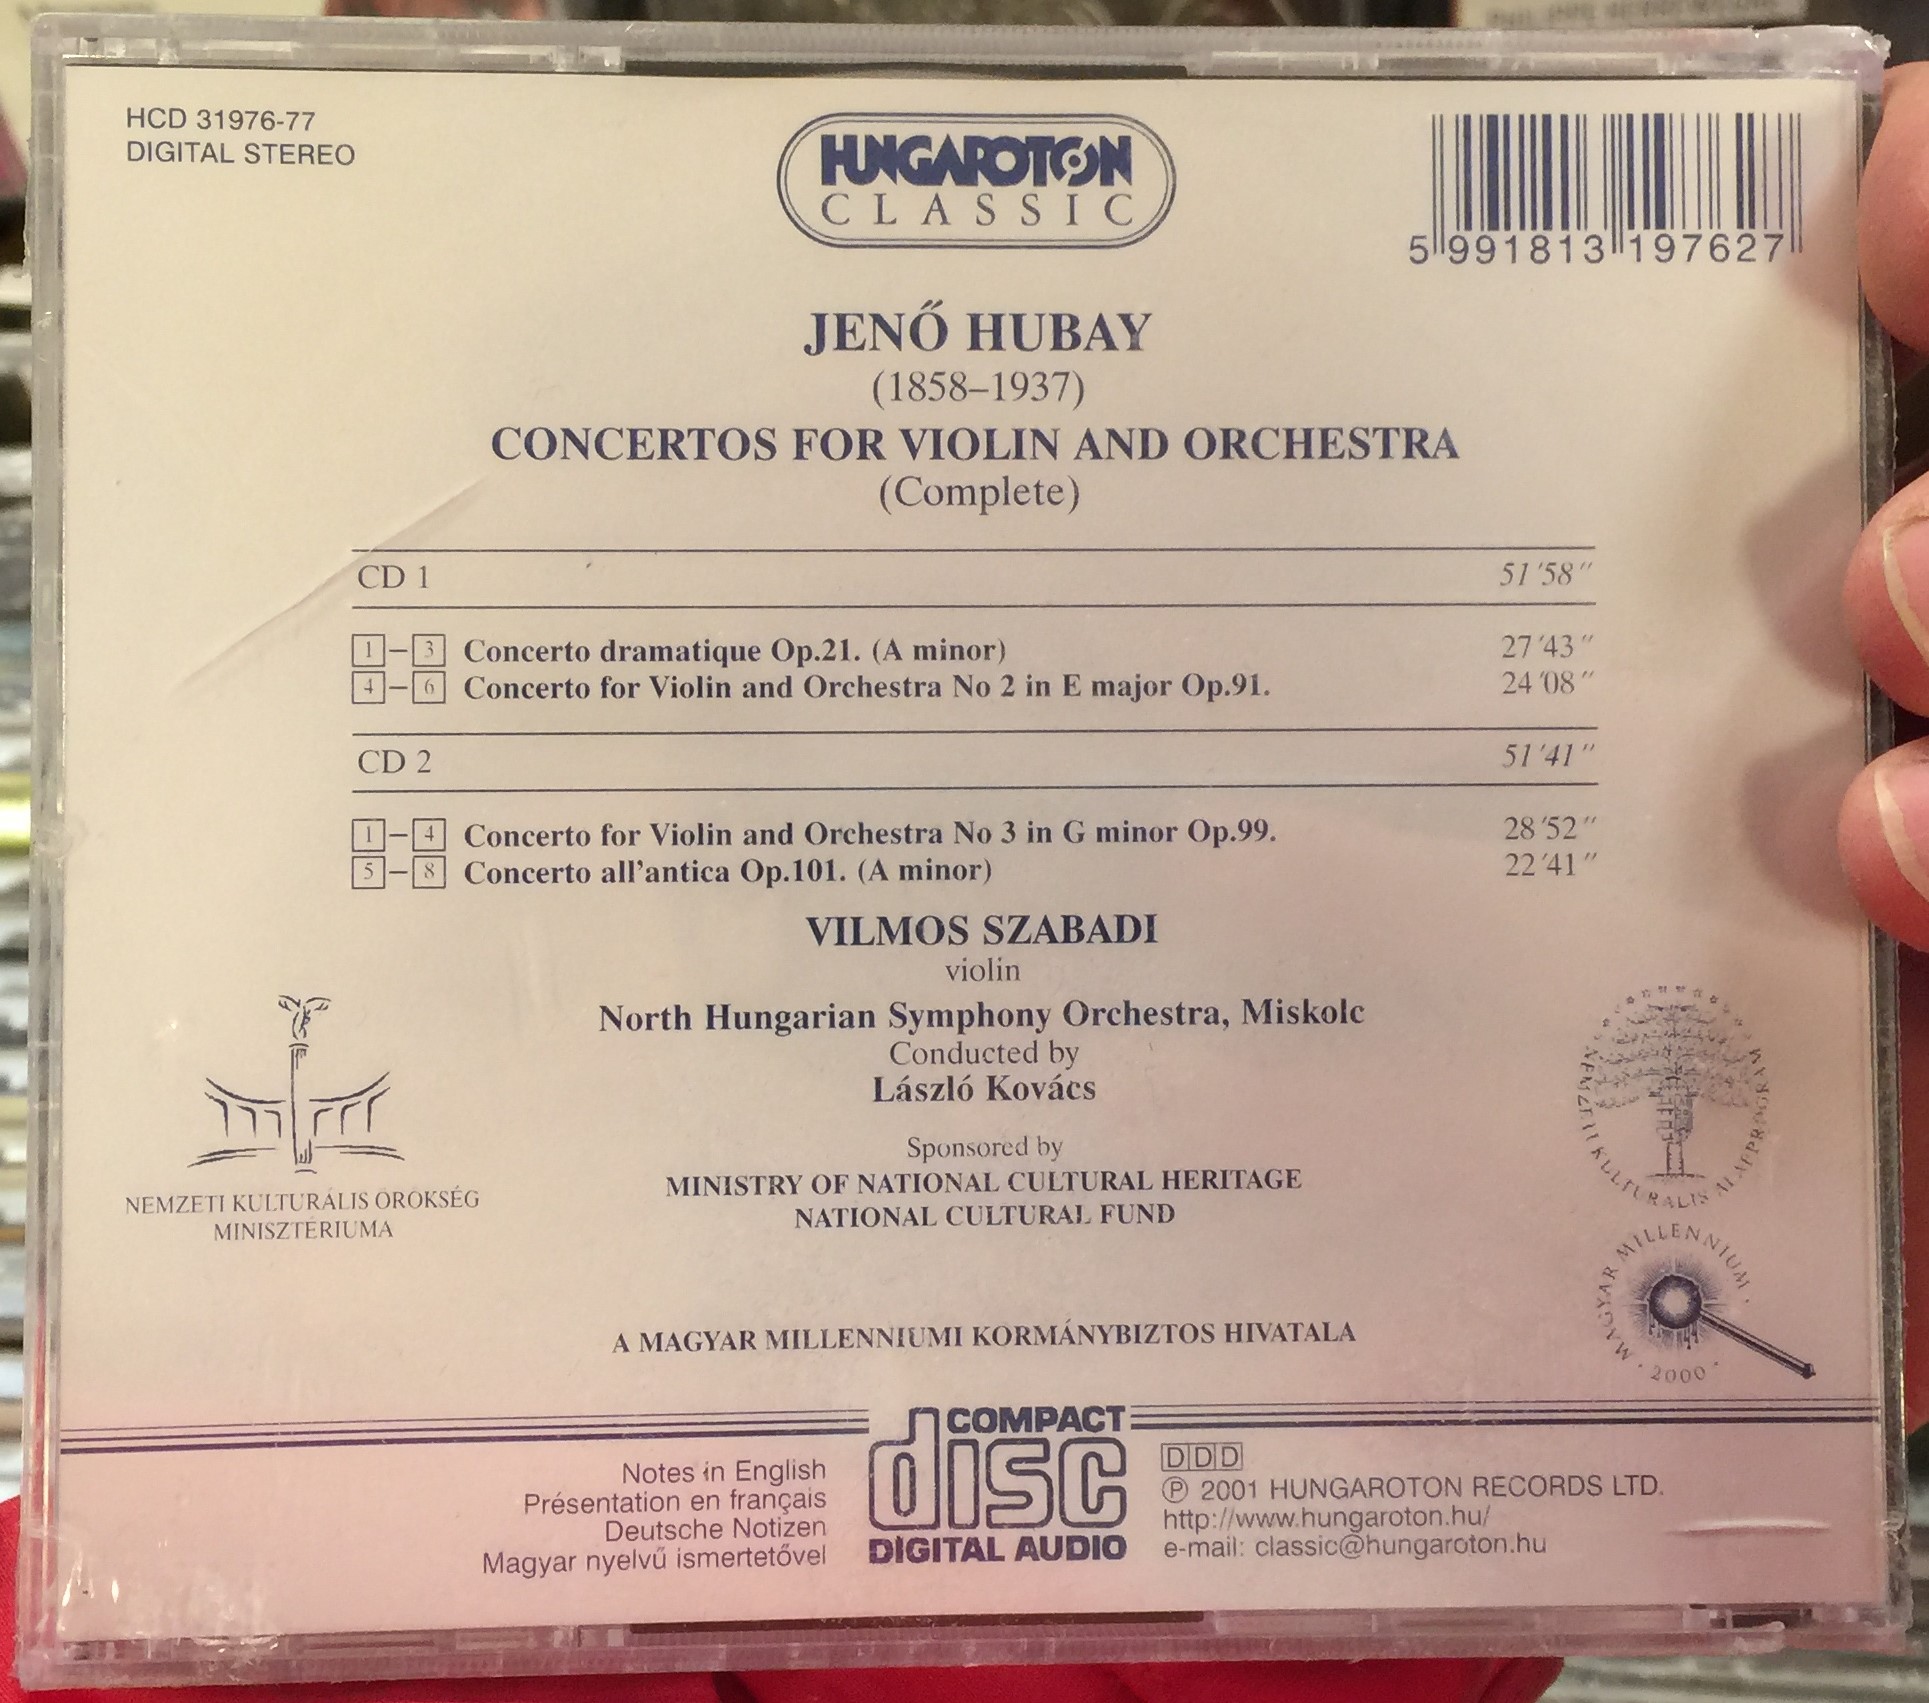 hubay-violin-concertos-complete-vilmos-szabadi-north-hungarian-symphony-orchestra-miskolc.-laszlo-kovacs-hungaroton-classic-2x-audio-cd-2001-stereo-hcd-31976-77-2-.jpg